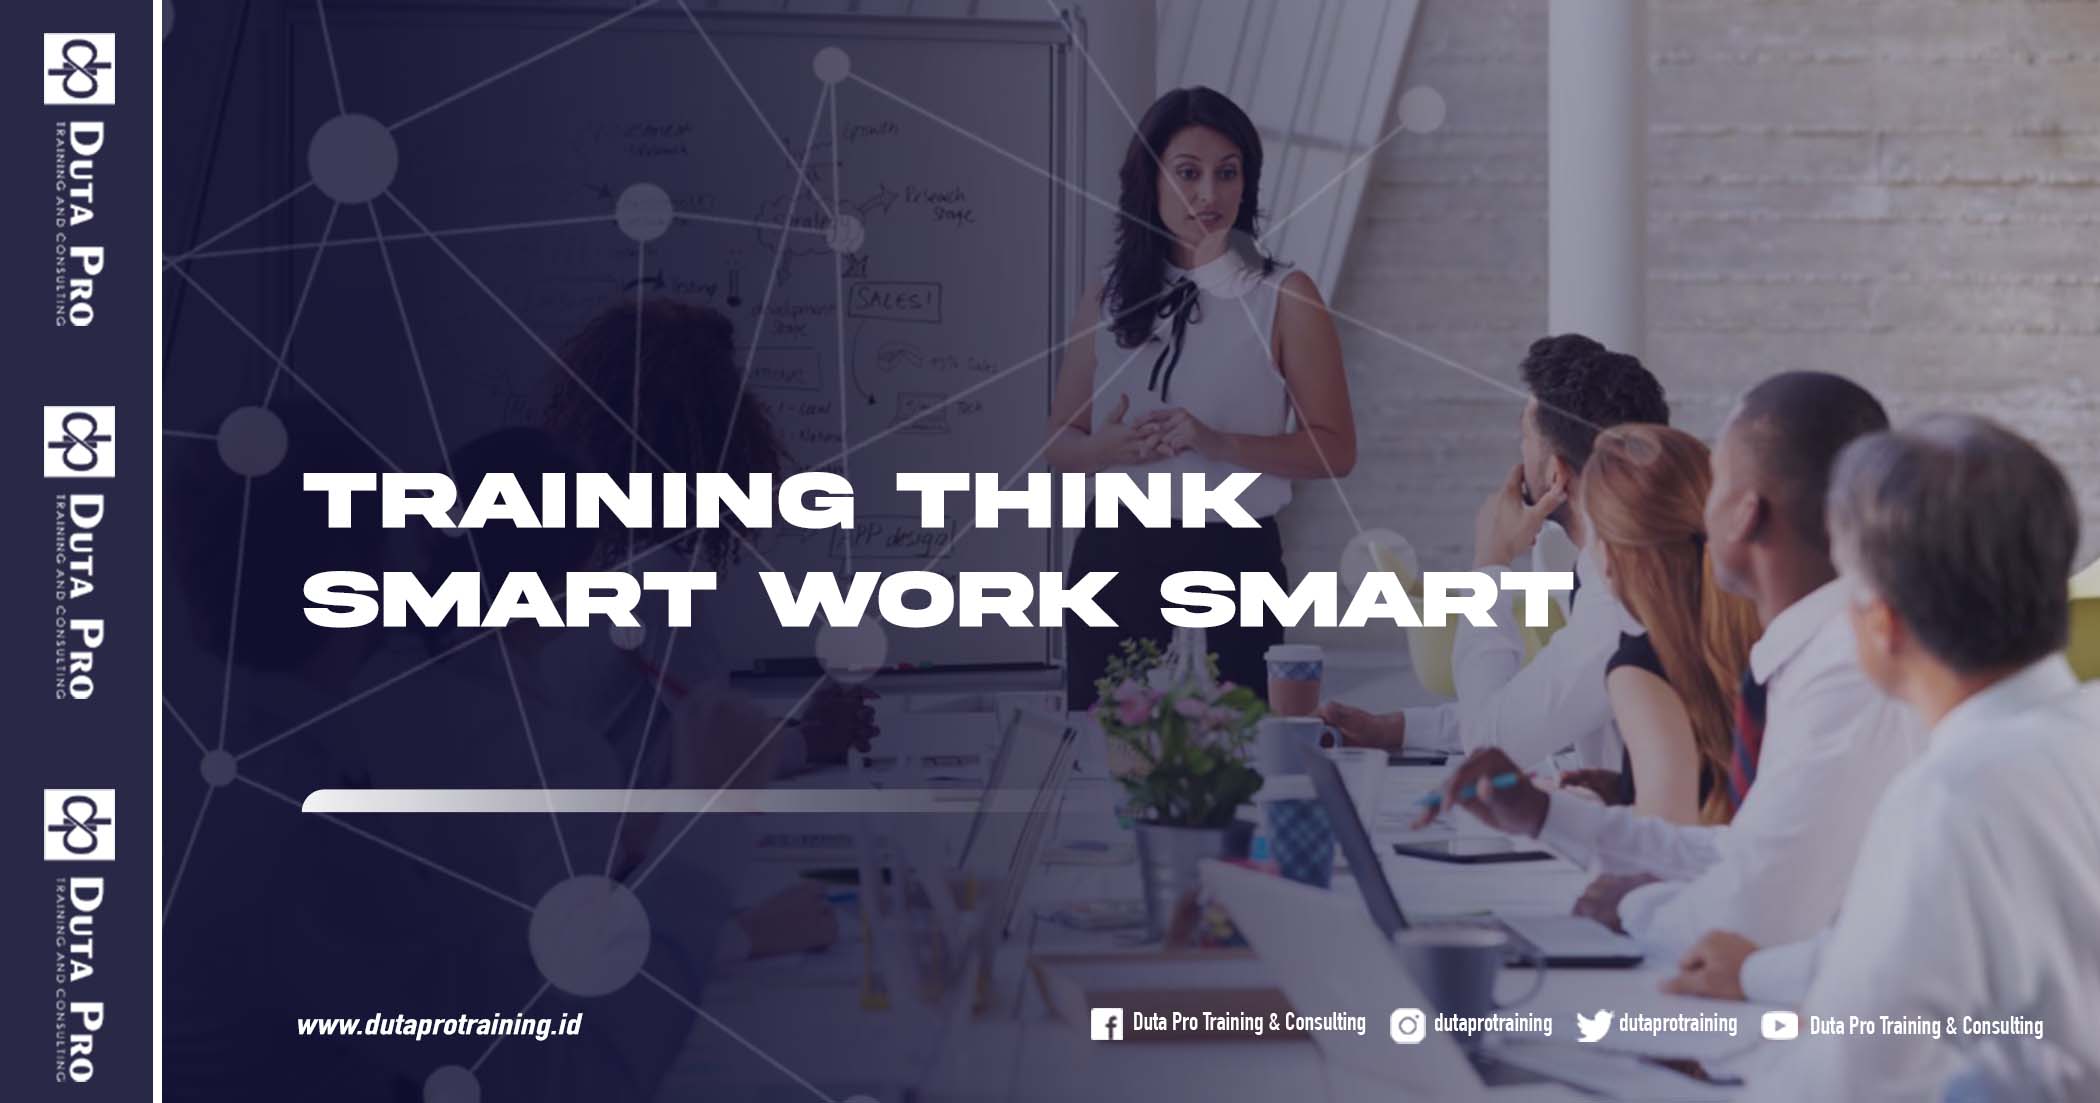 Pusat Informasi Training - Pelatihan di Jakarta, Bandung, Jogja, Surabaya, Bali, Lombok, Kalimantan Murah Training Think Smart Work Smart Duta Pro Training Consulting